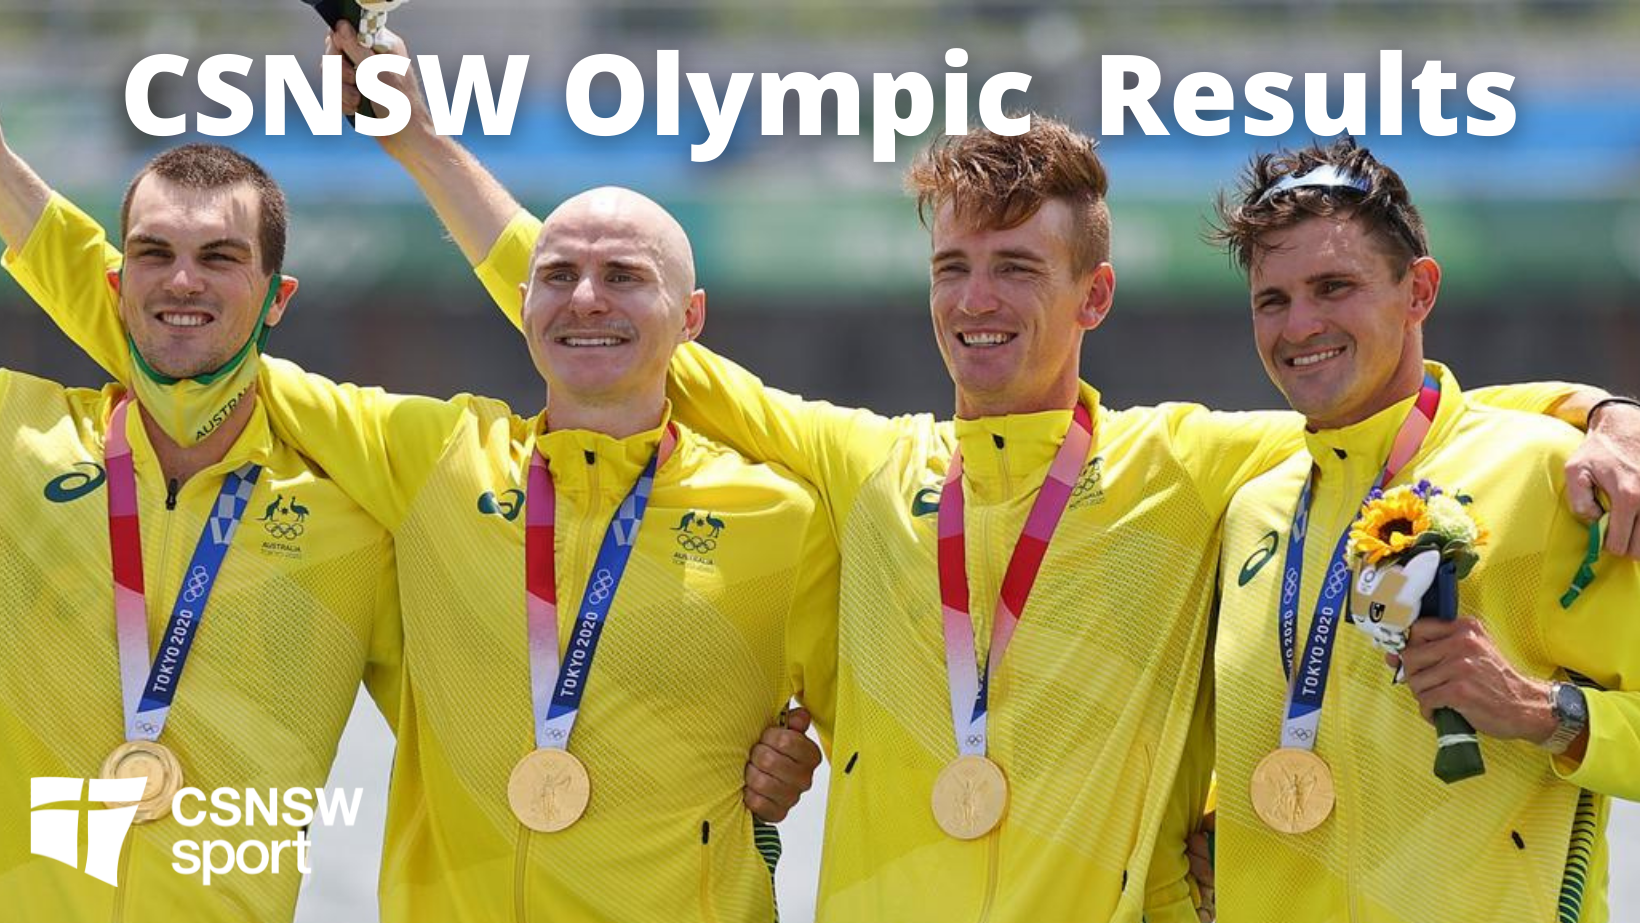 CSNSW's Olympic Success (12)